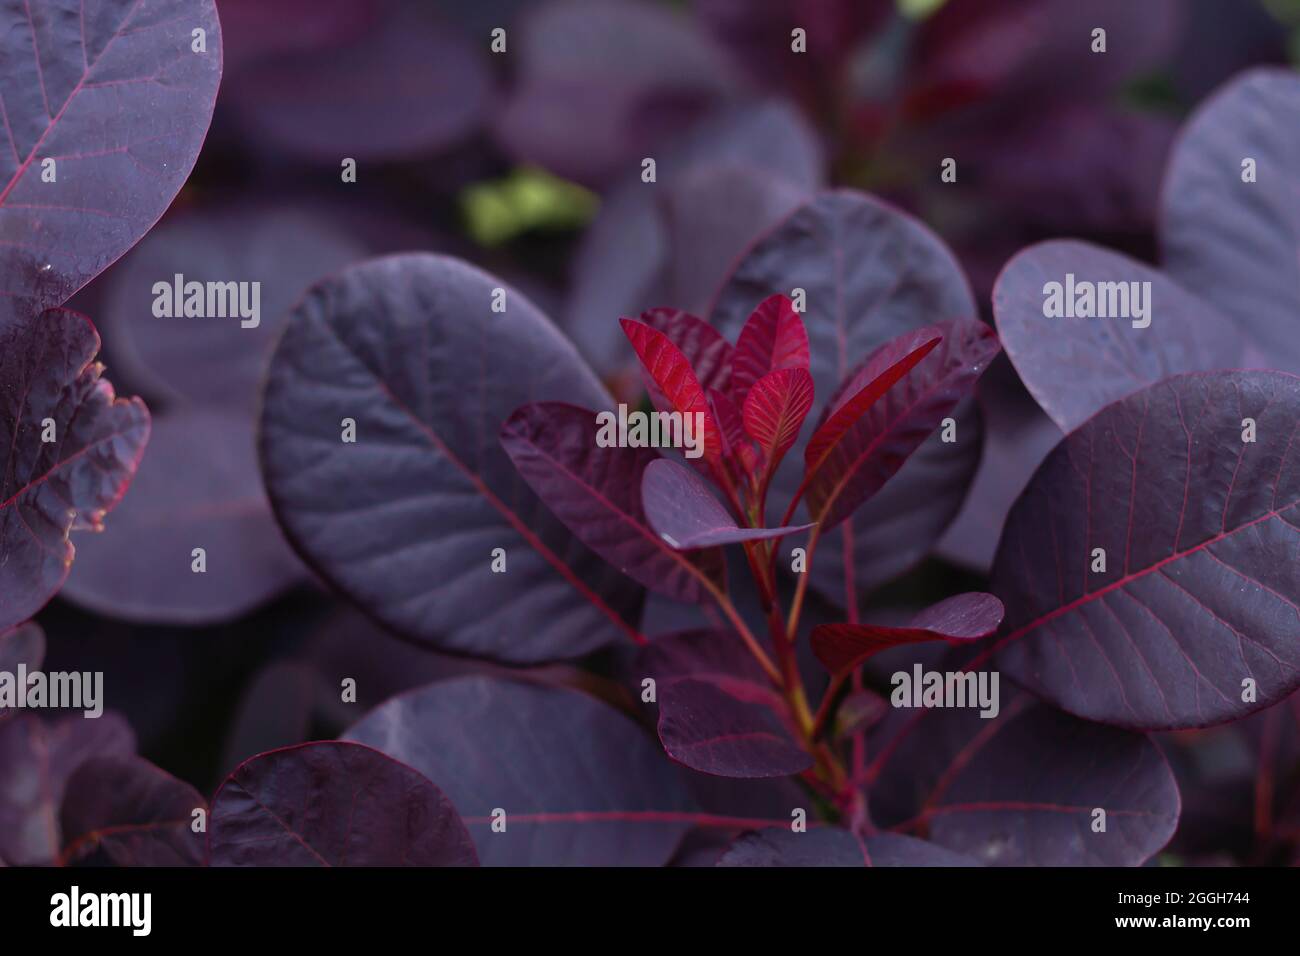 Cotinus coggygria european smoketree Royal purple dark red purplish leaves detail Stock Photo